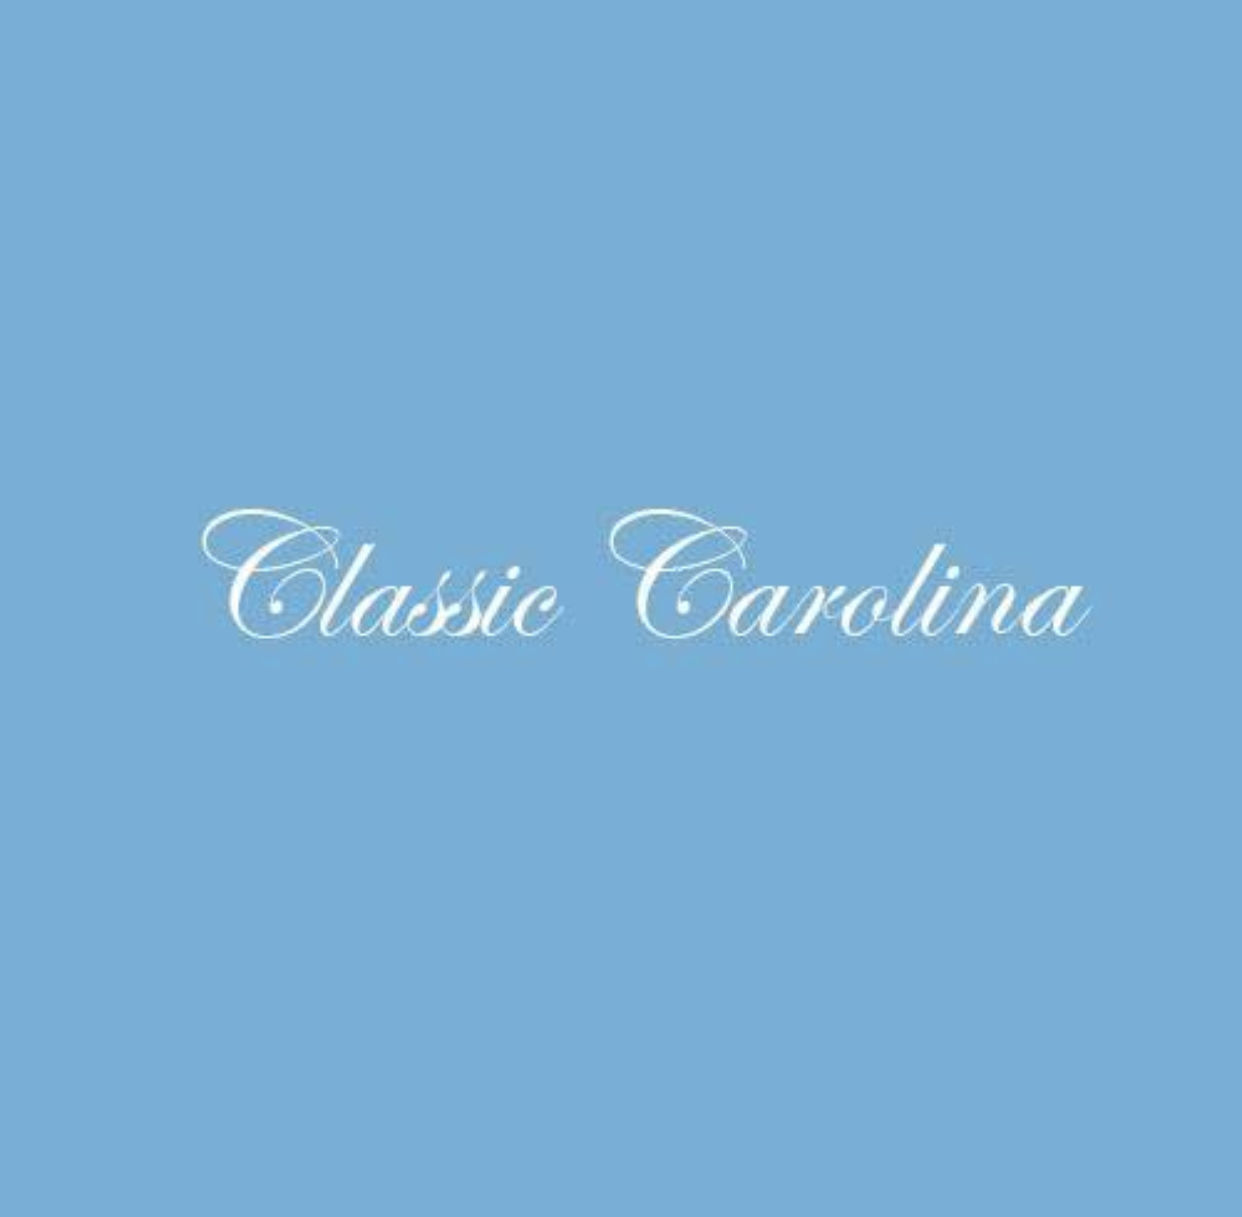 Classic Carolina